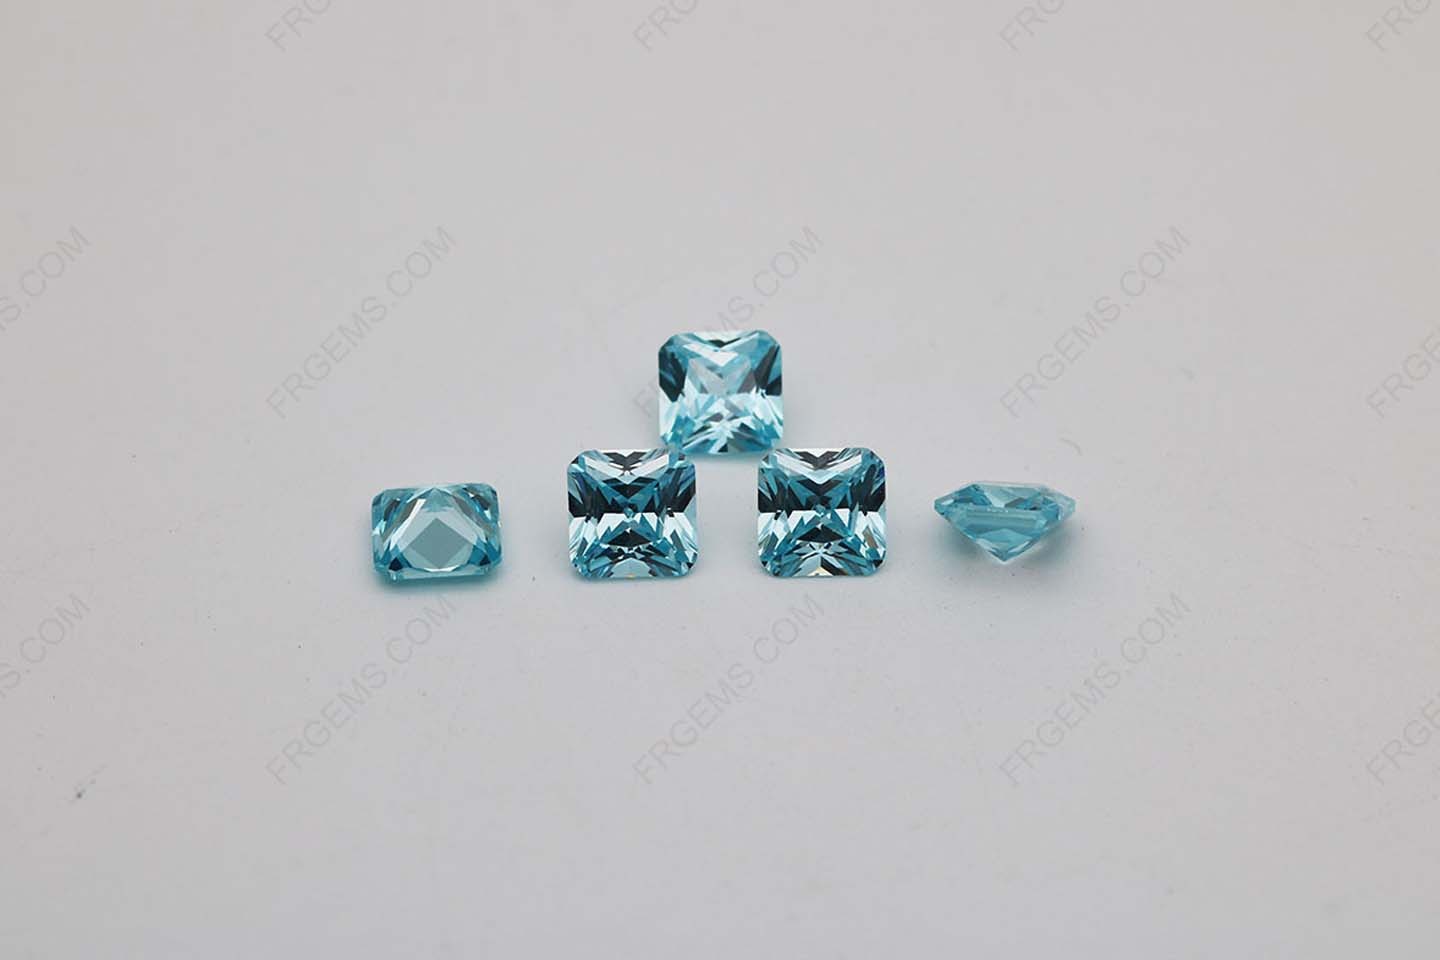 Cubic_Zirconia_Aquamarine_Radiant_Cut_7x7mm_stones_China_Supplier_IMG_2408